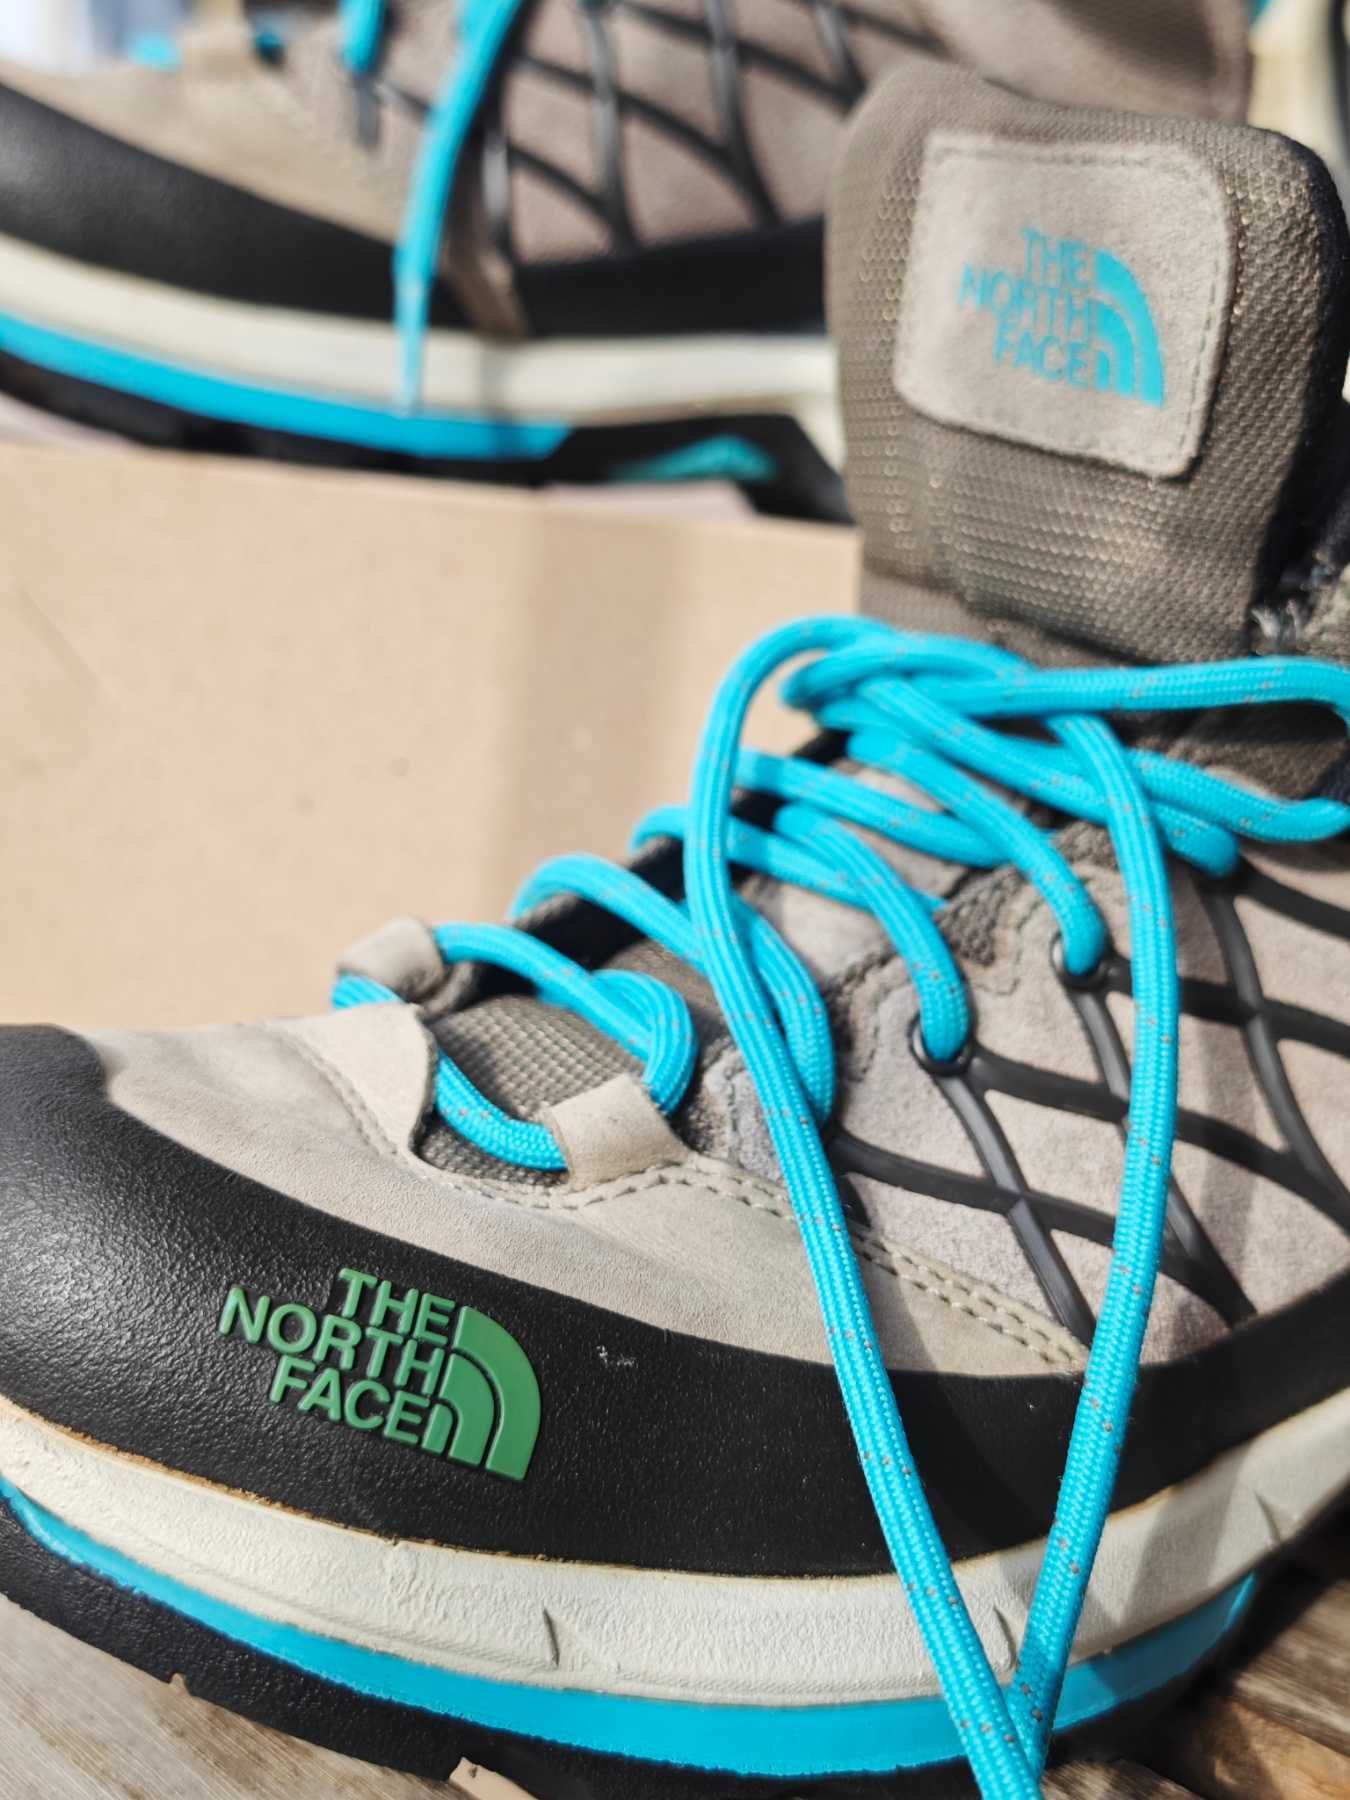 The North Face туристически обувки, ходили в Хималаите :-)